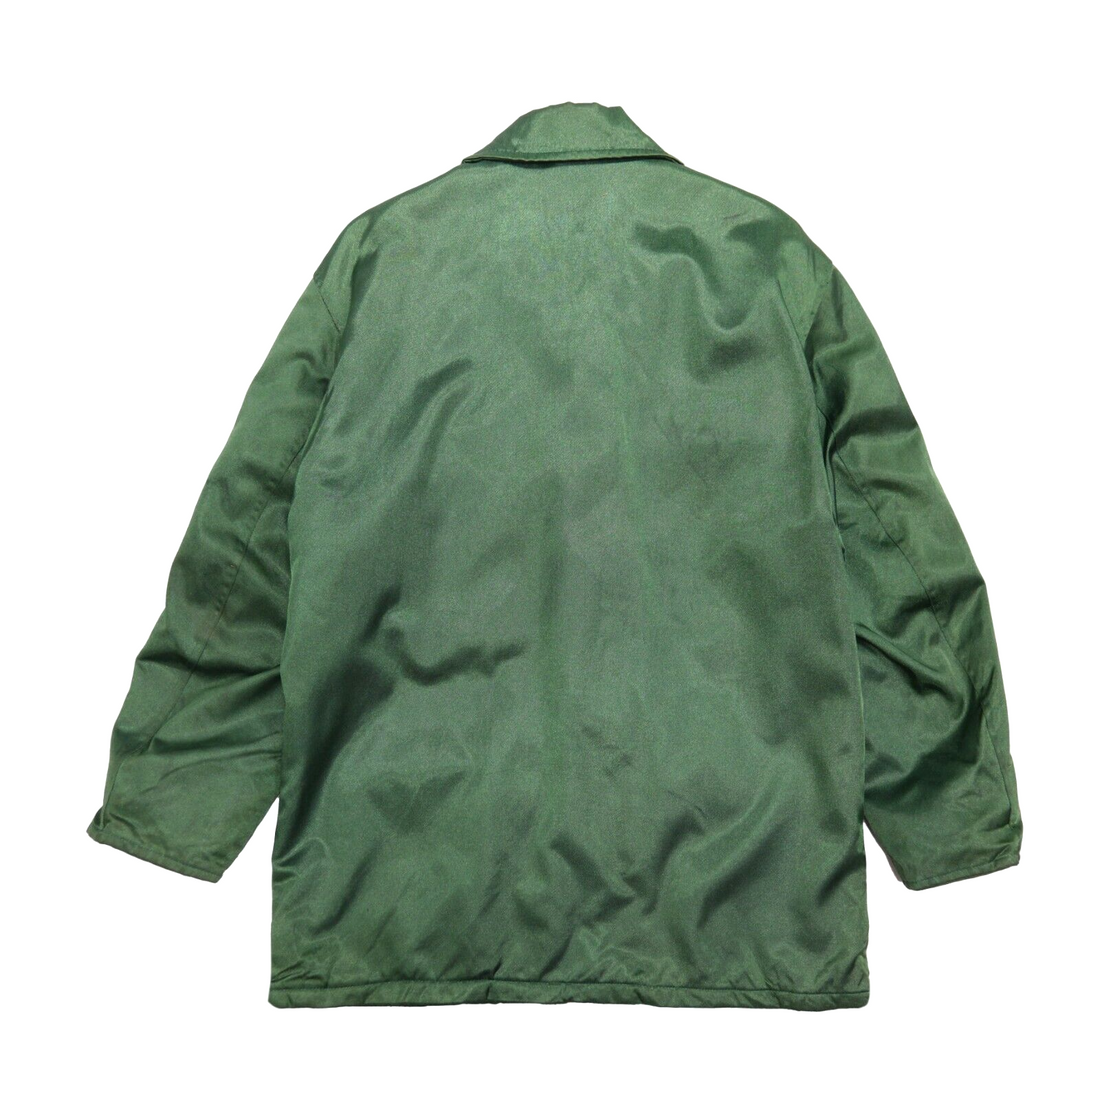 Vintage Spiewak Parka Coat Jacket Size 44 Green Made USA Ideal Zip